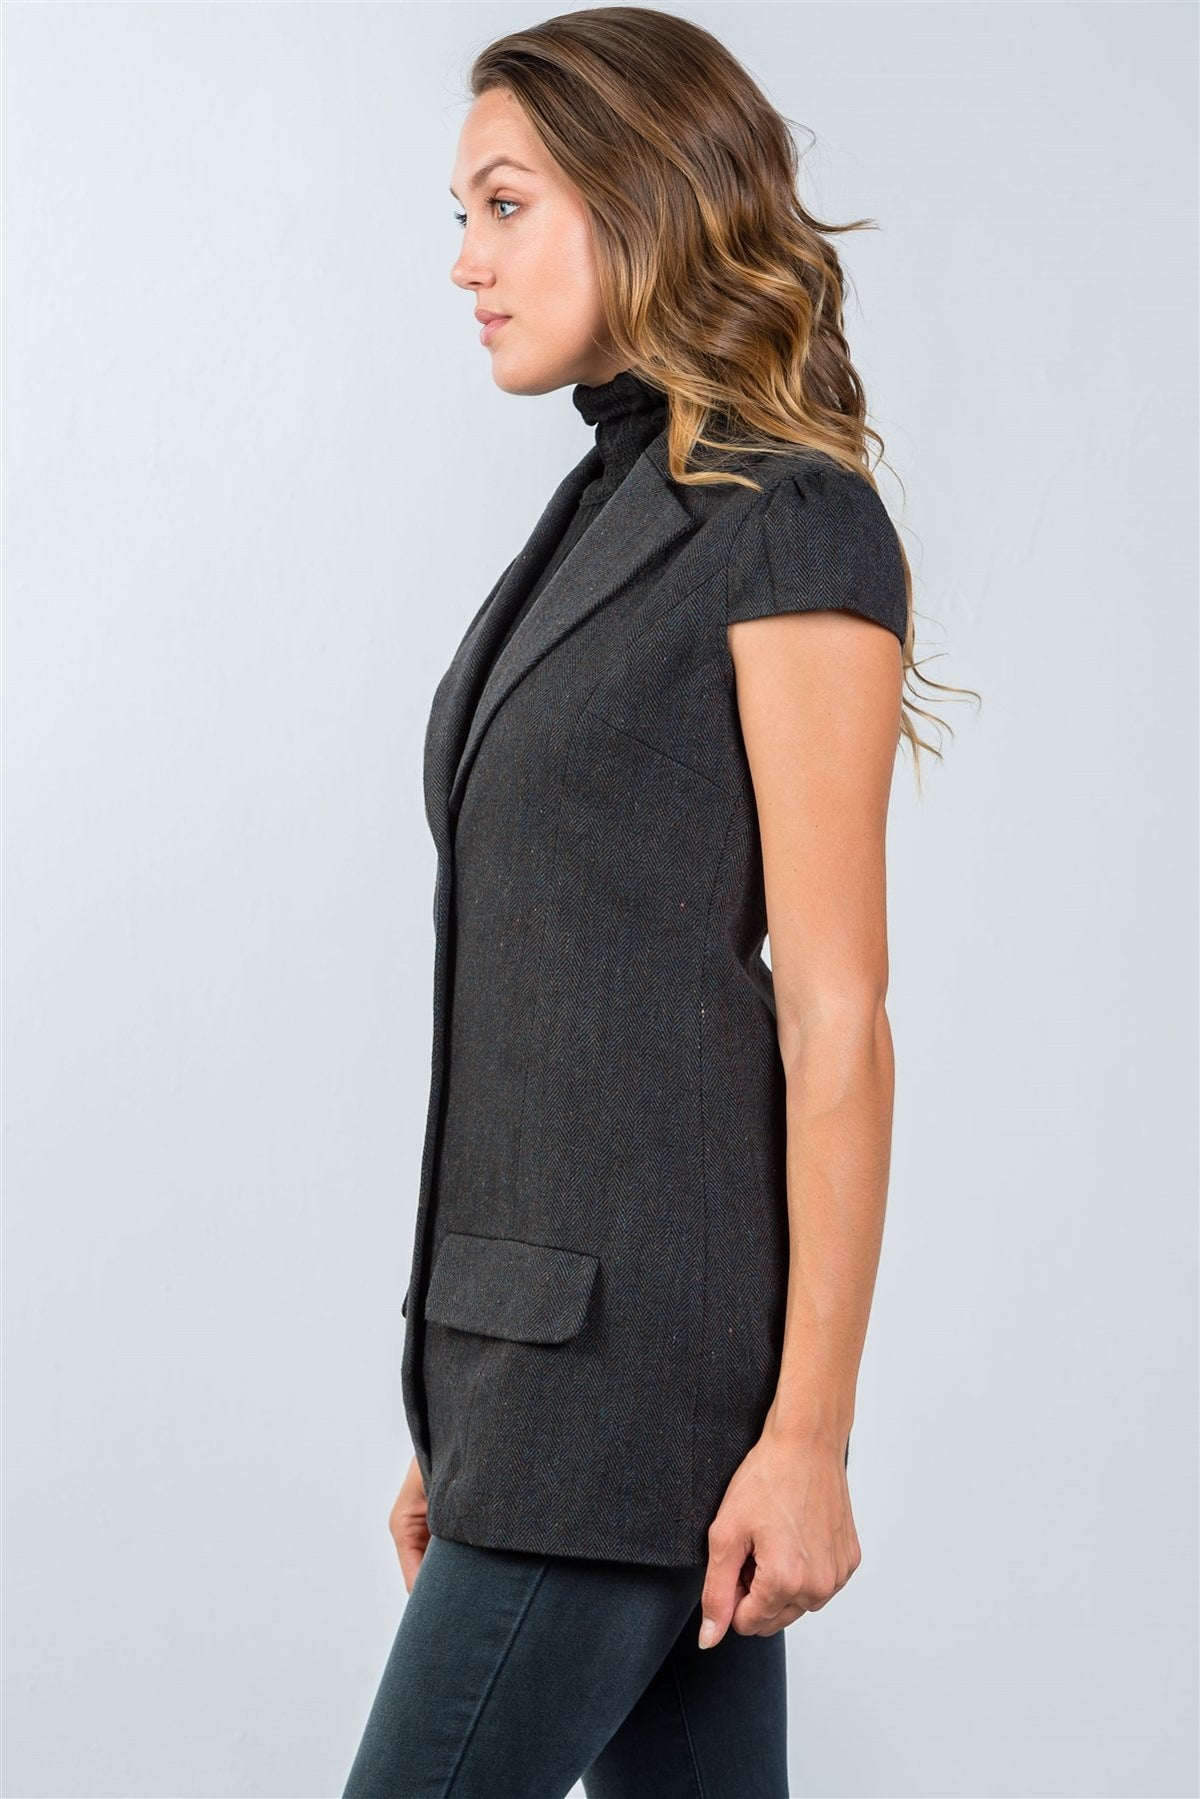 Dianna Deanna Polyester Blend Ladies Fashion Cap Sleeve Button Detail Navy Jacket